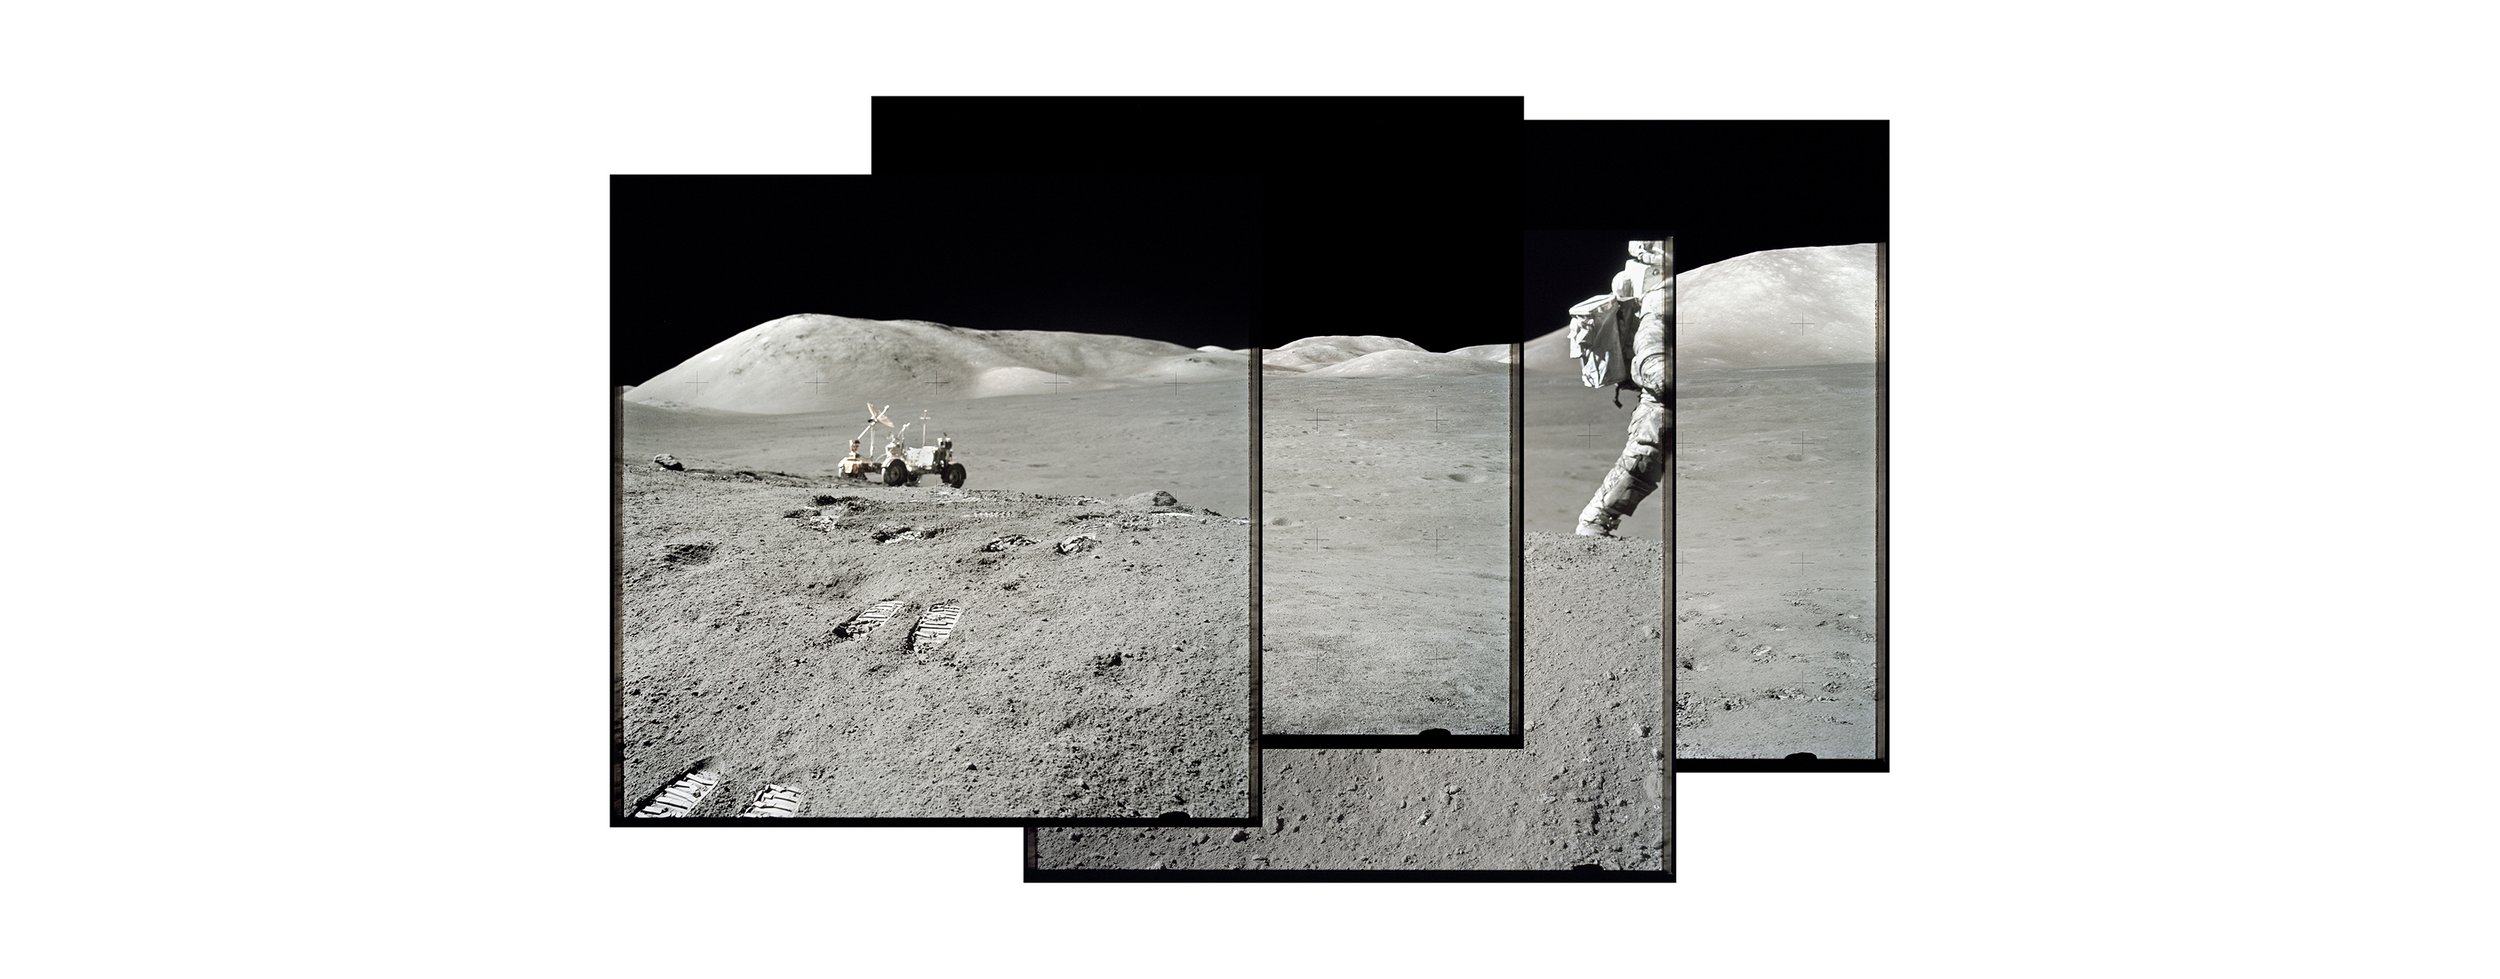  Taurus-Littrow Valley, LRV and footprints in skipping mode (100x60)Apollo 17 Magazine 146/F - NASA photographs 1972 